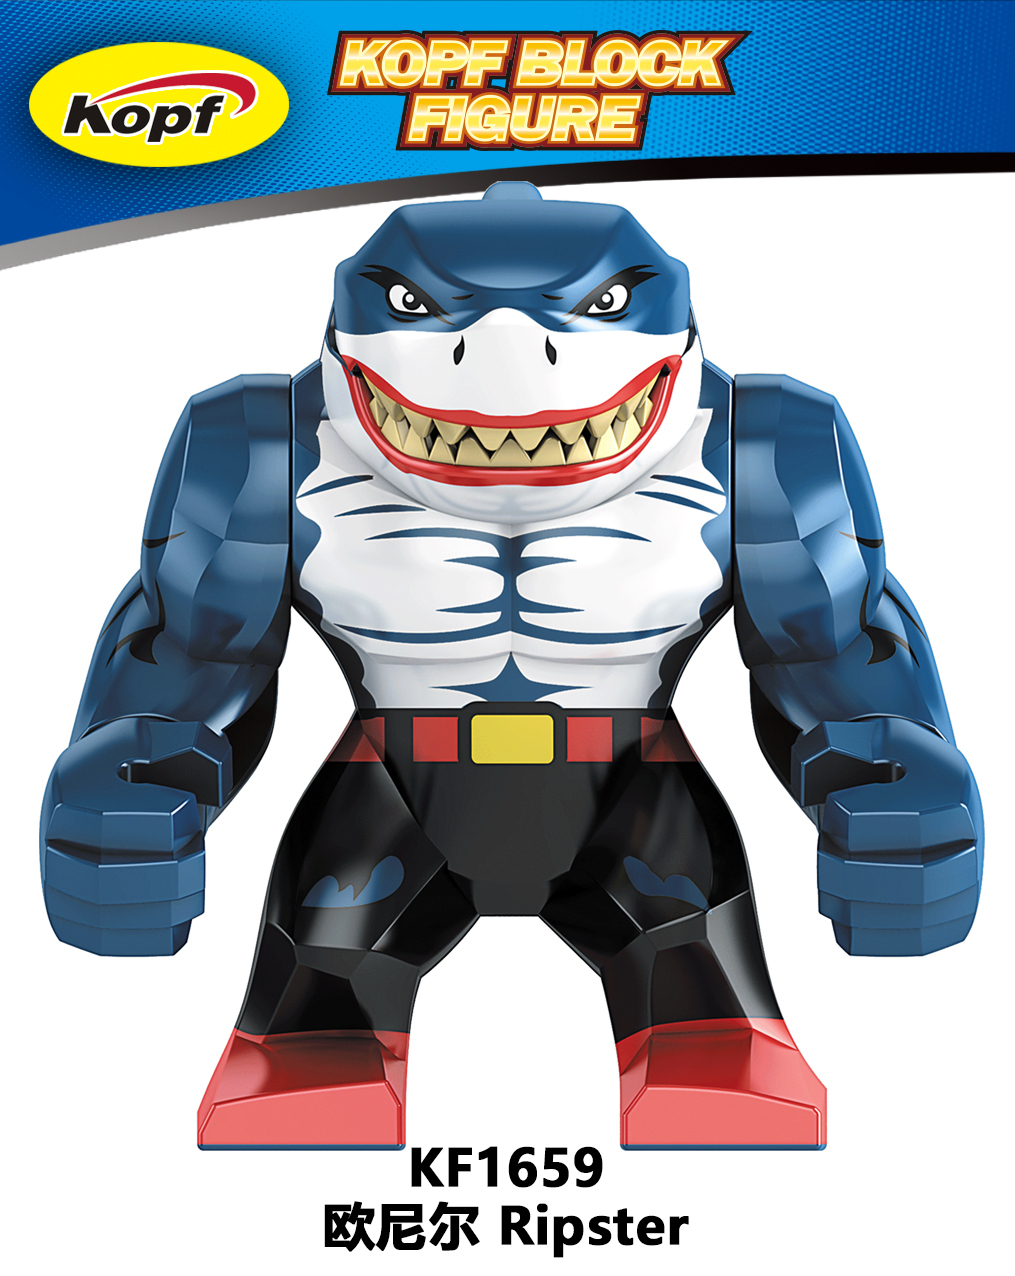 Big Figures Super Heroes Lizard Venom Carnage Movie Series Building Blocks Action Figures Educational Toys For Kids Gifts